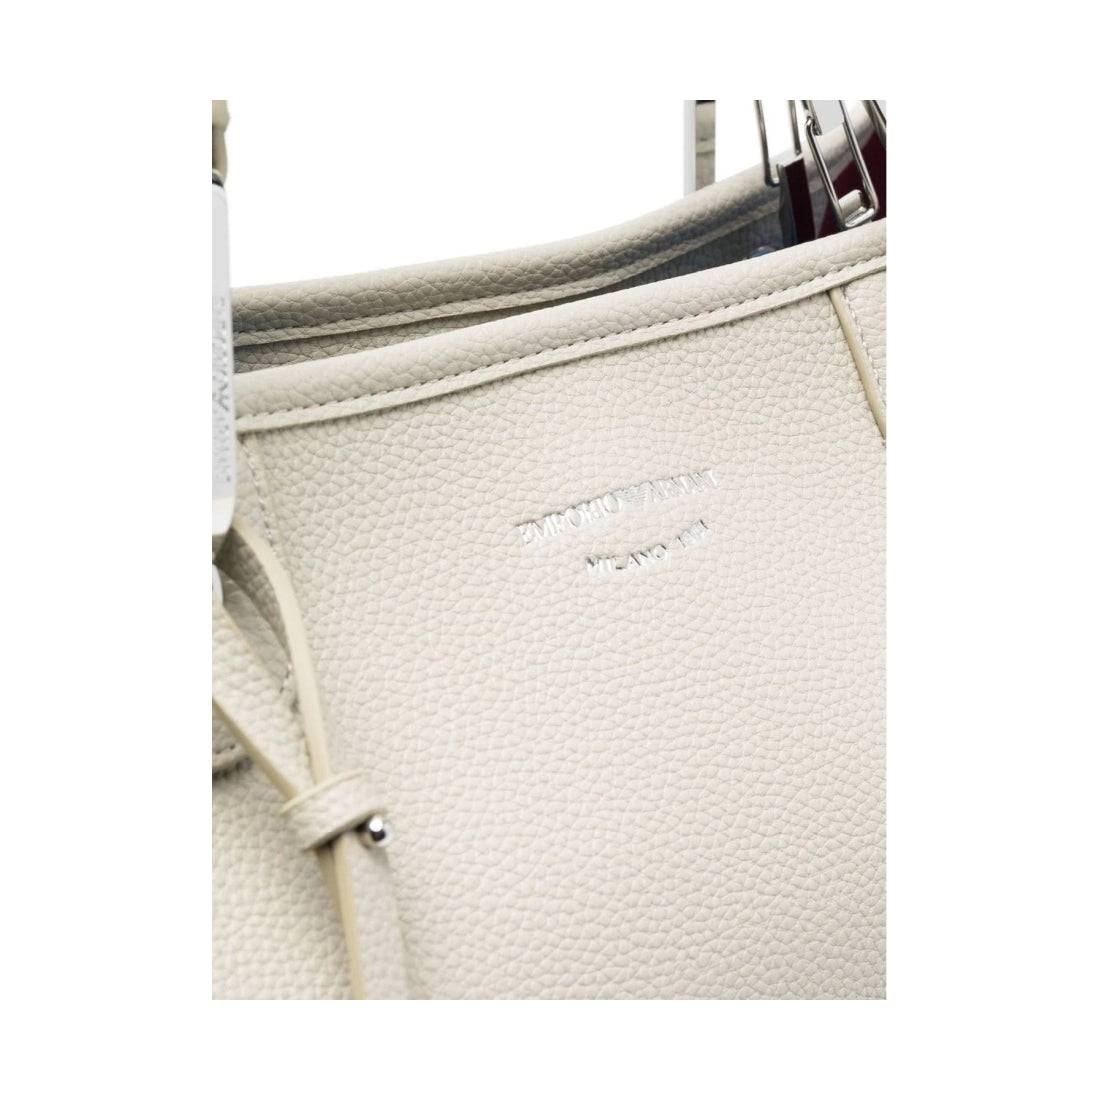 Emporio Armani womens mercurio geraneo casual shopping bag | Vilbury London